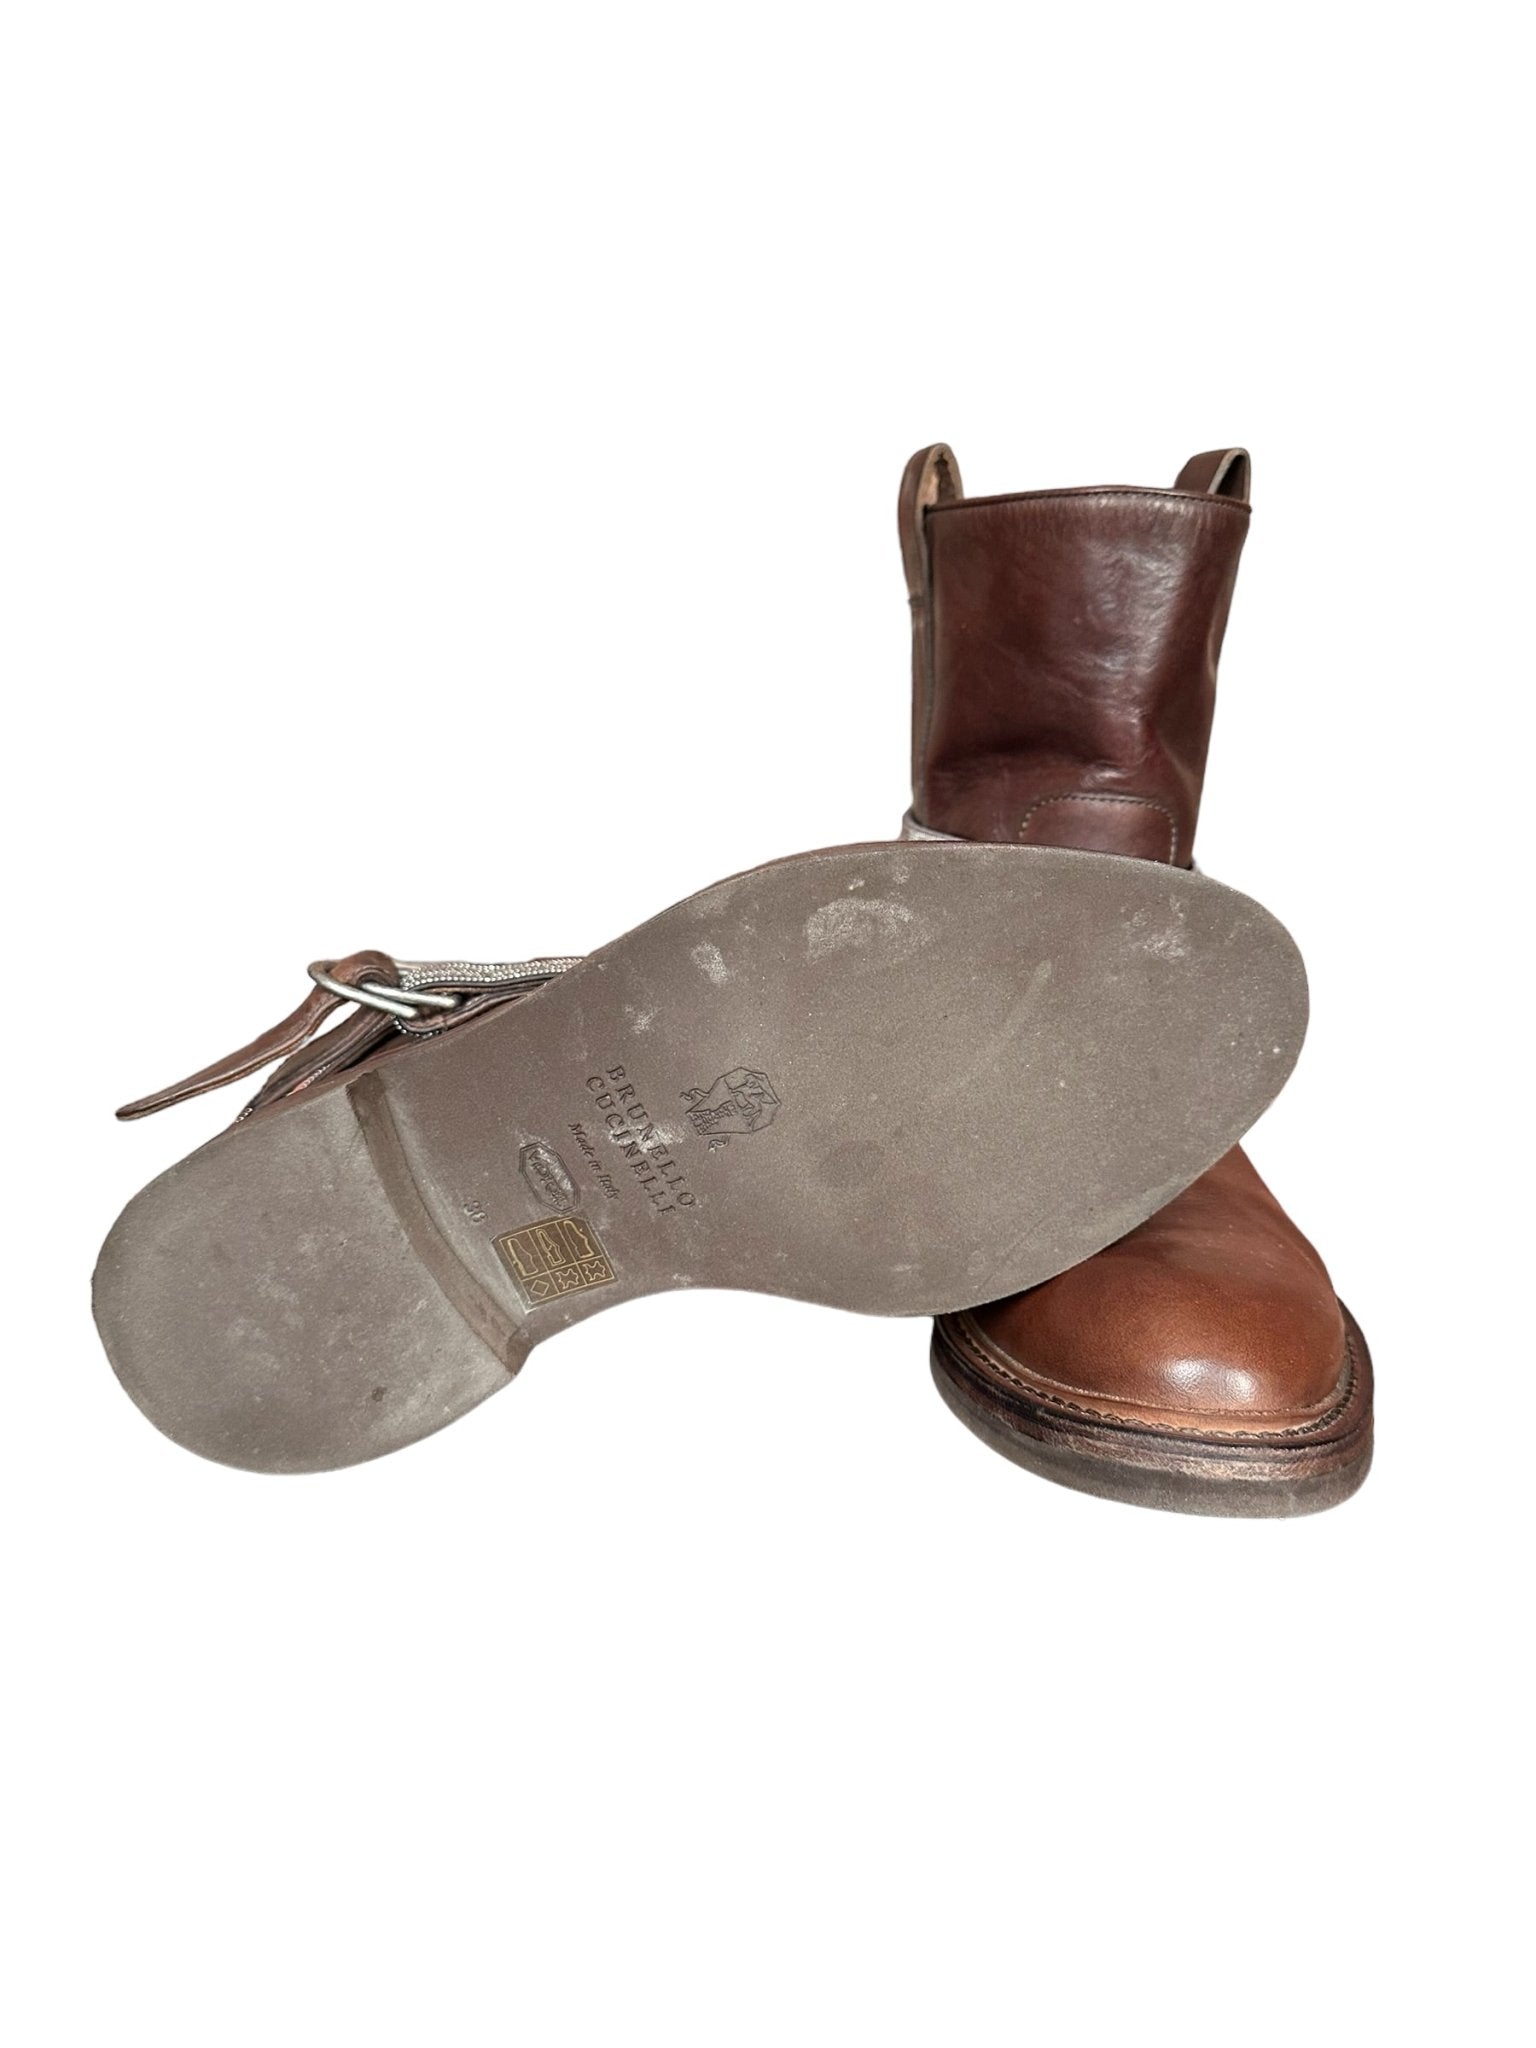 Brunello Cucinelli Stiefel Chelsea-Boots mit Monili - 24/7 Clothing